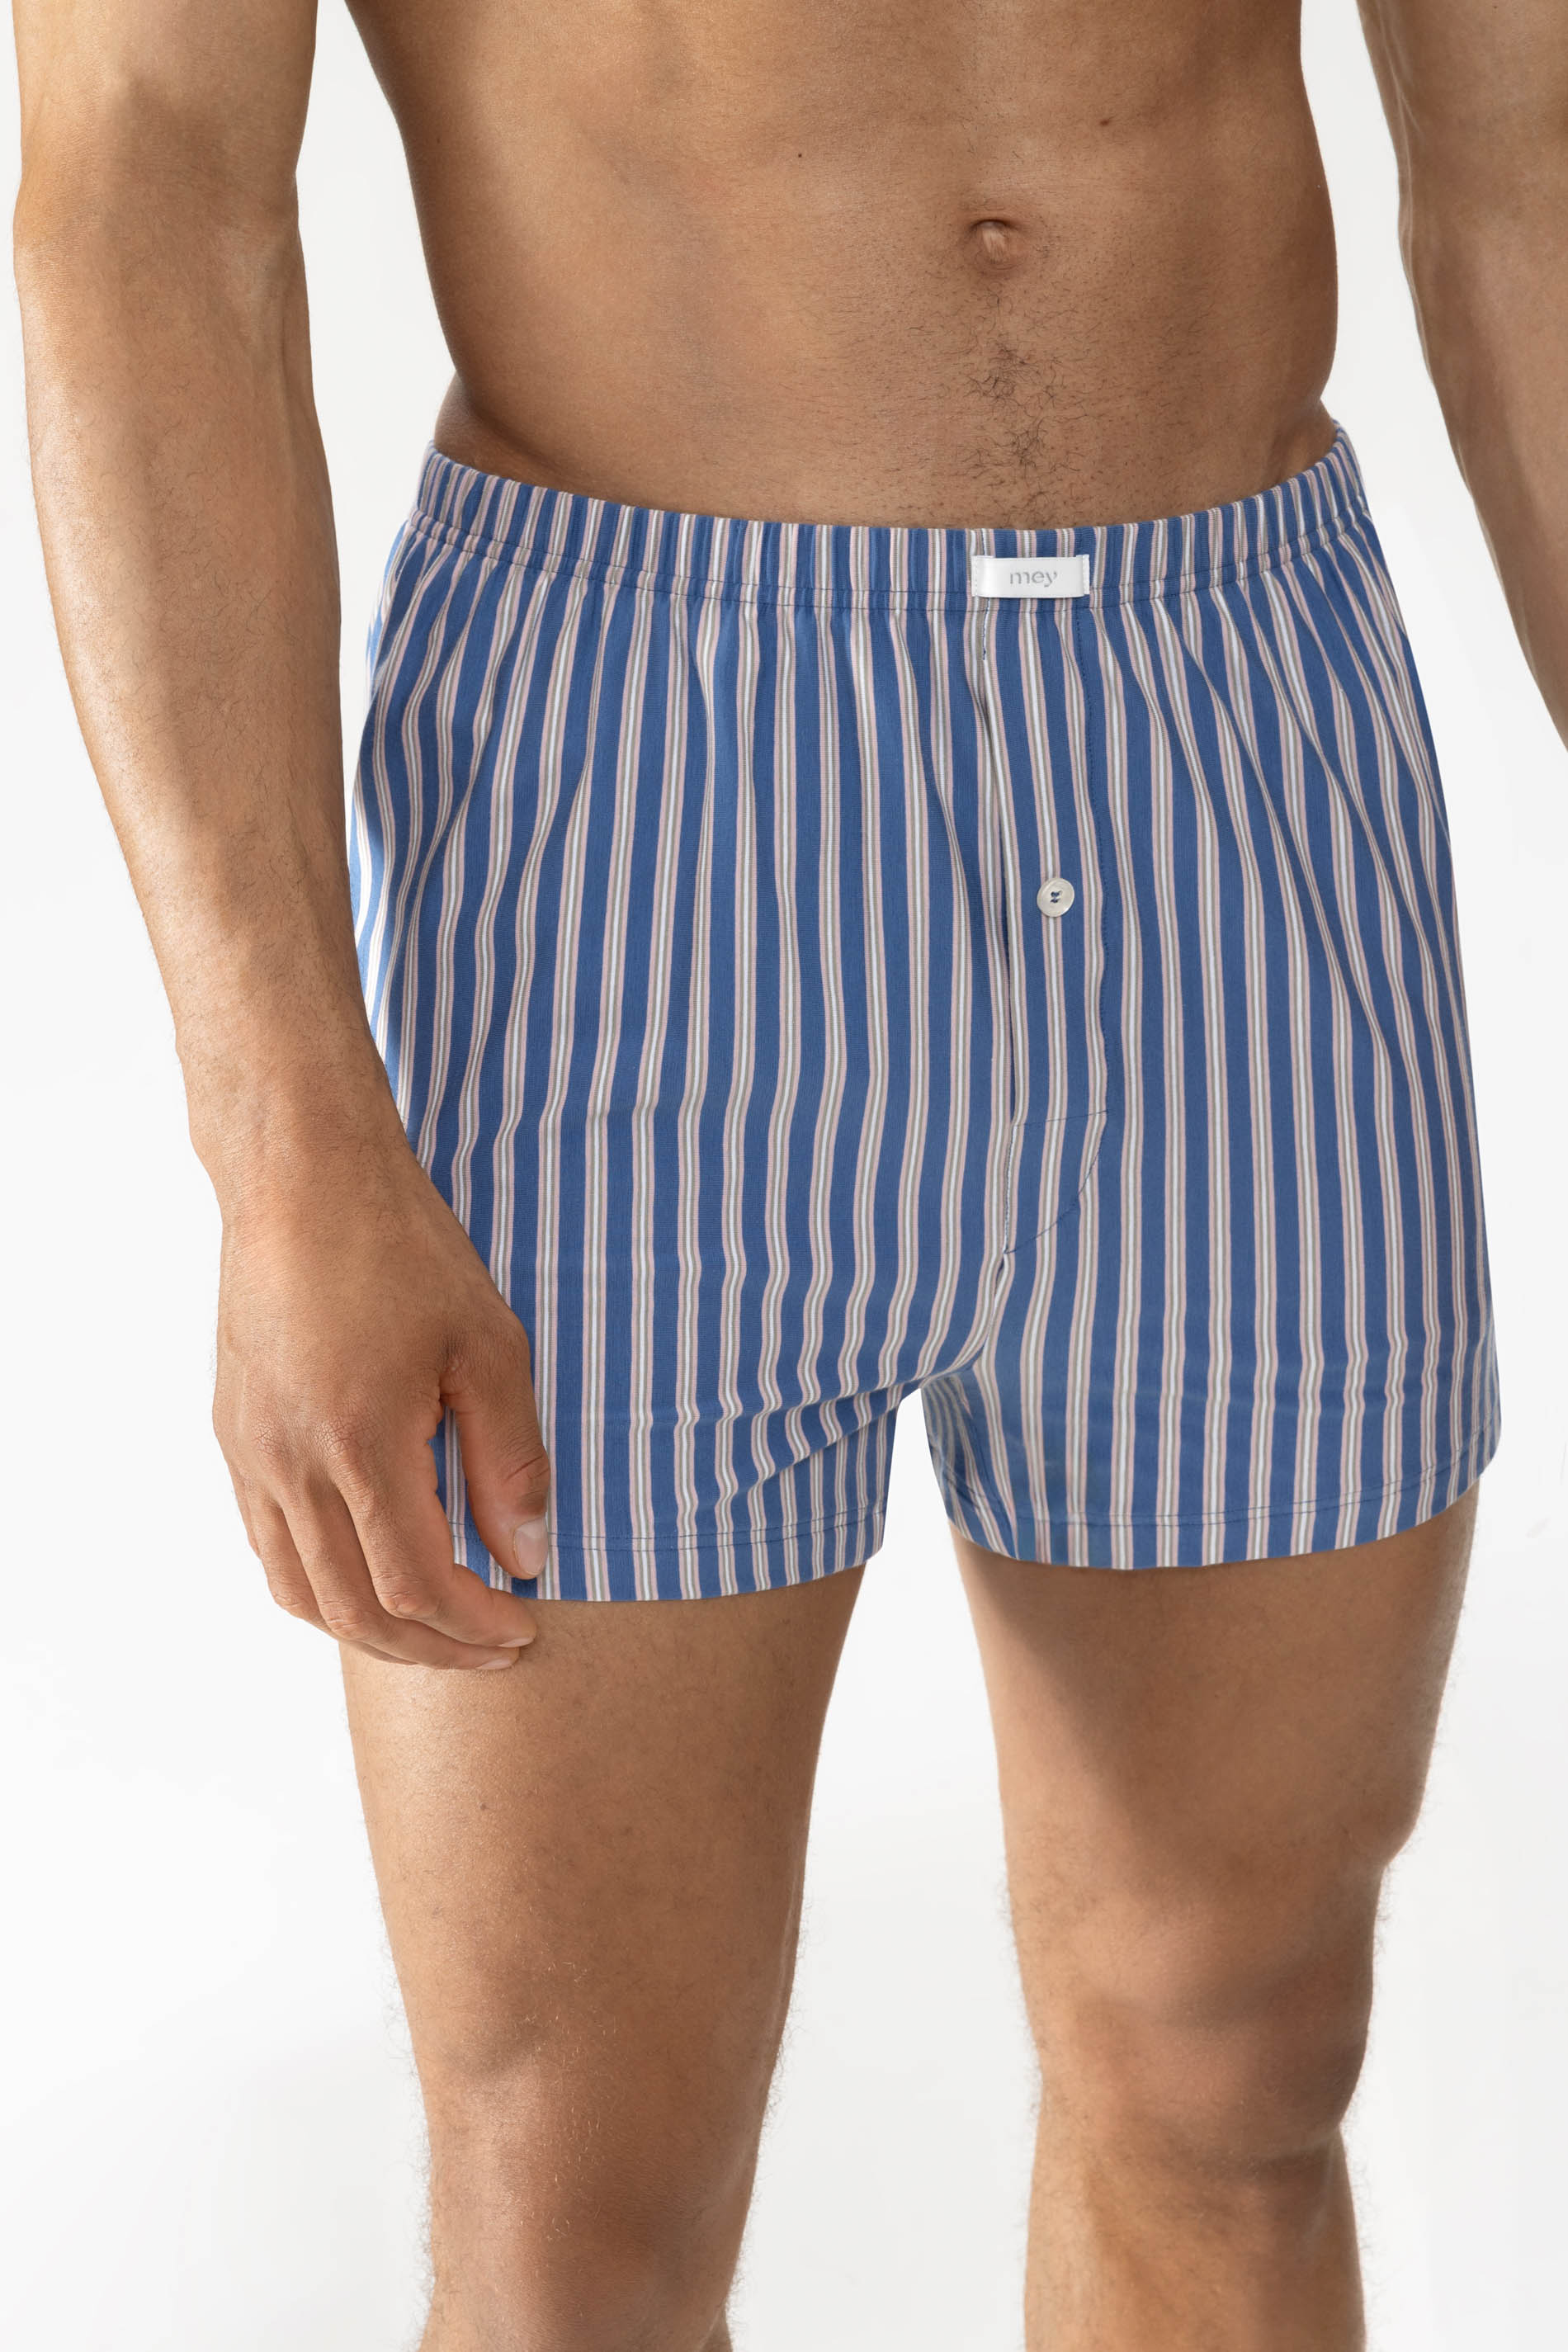 Boxer shorts Serie Blue Stripes Detail View 01 | mey®